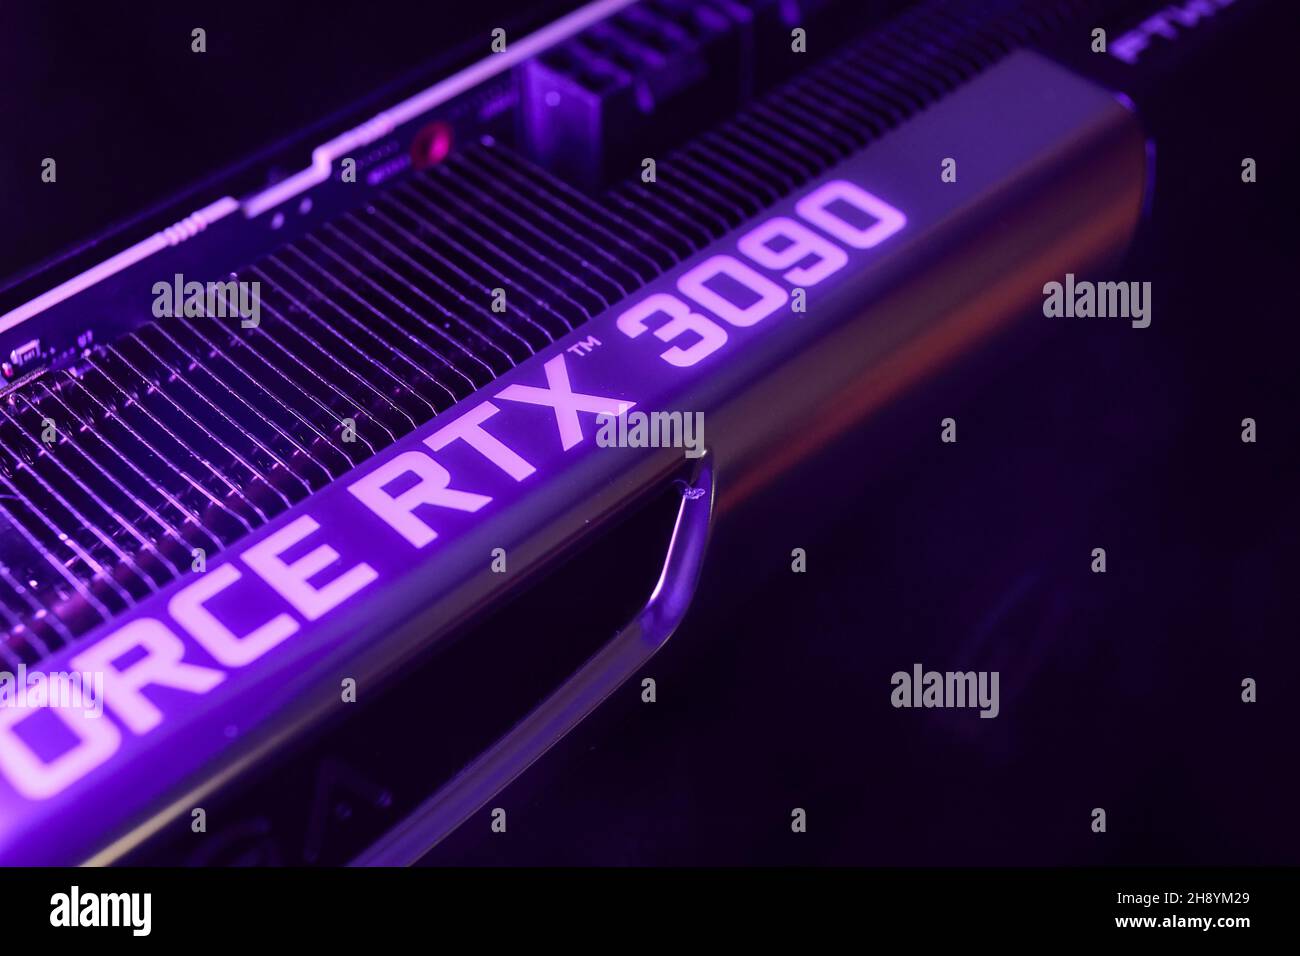 Geforce RTX 3090 Nvidia GPU graphics card detail Stock Photo